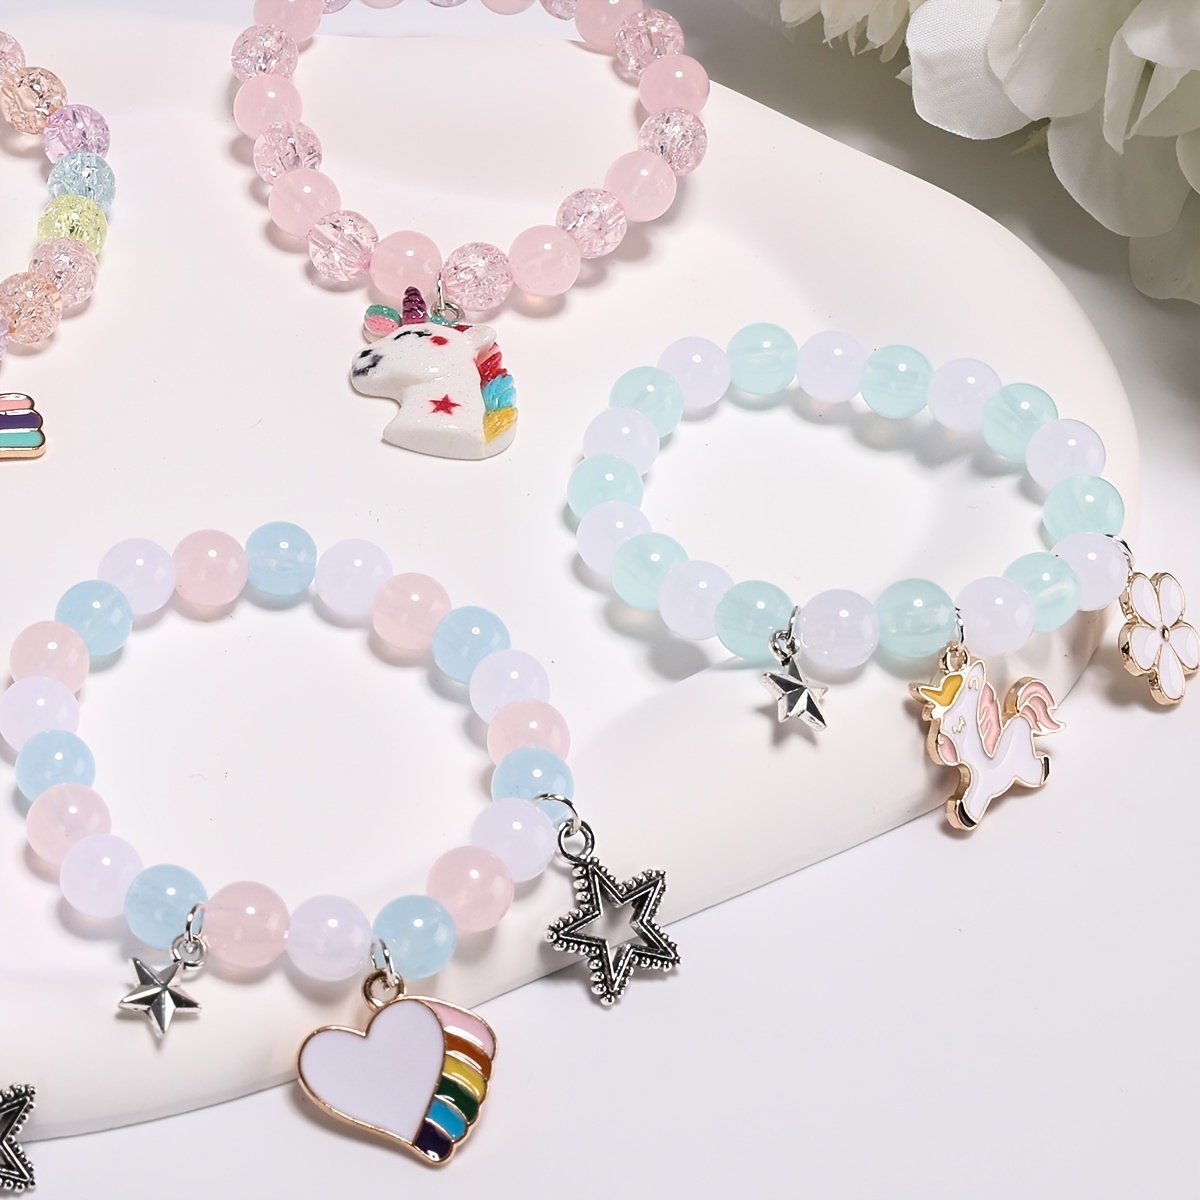 2 Kids Stuff Unicorn Charms Bracelet Craft & Ice Beads DIY Jewelry